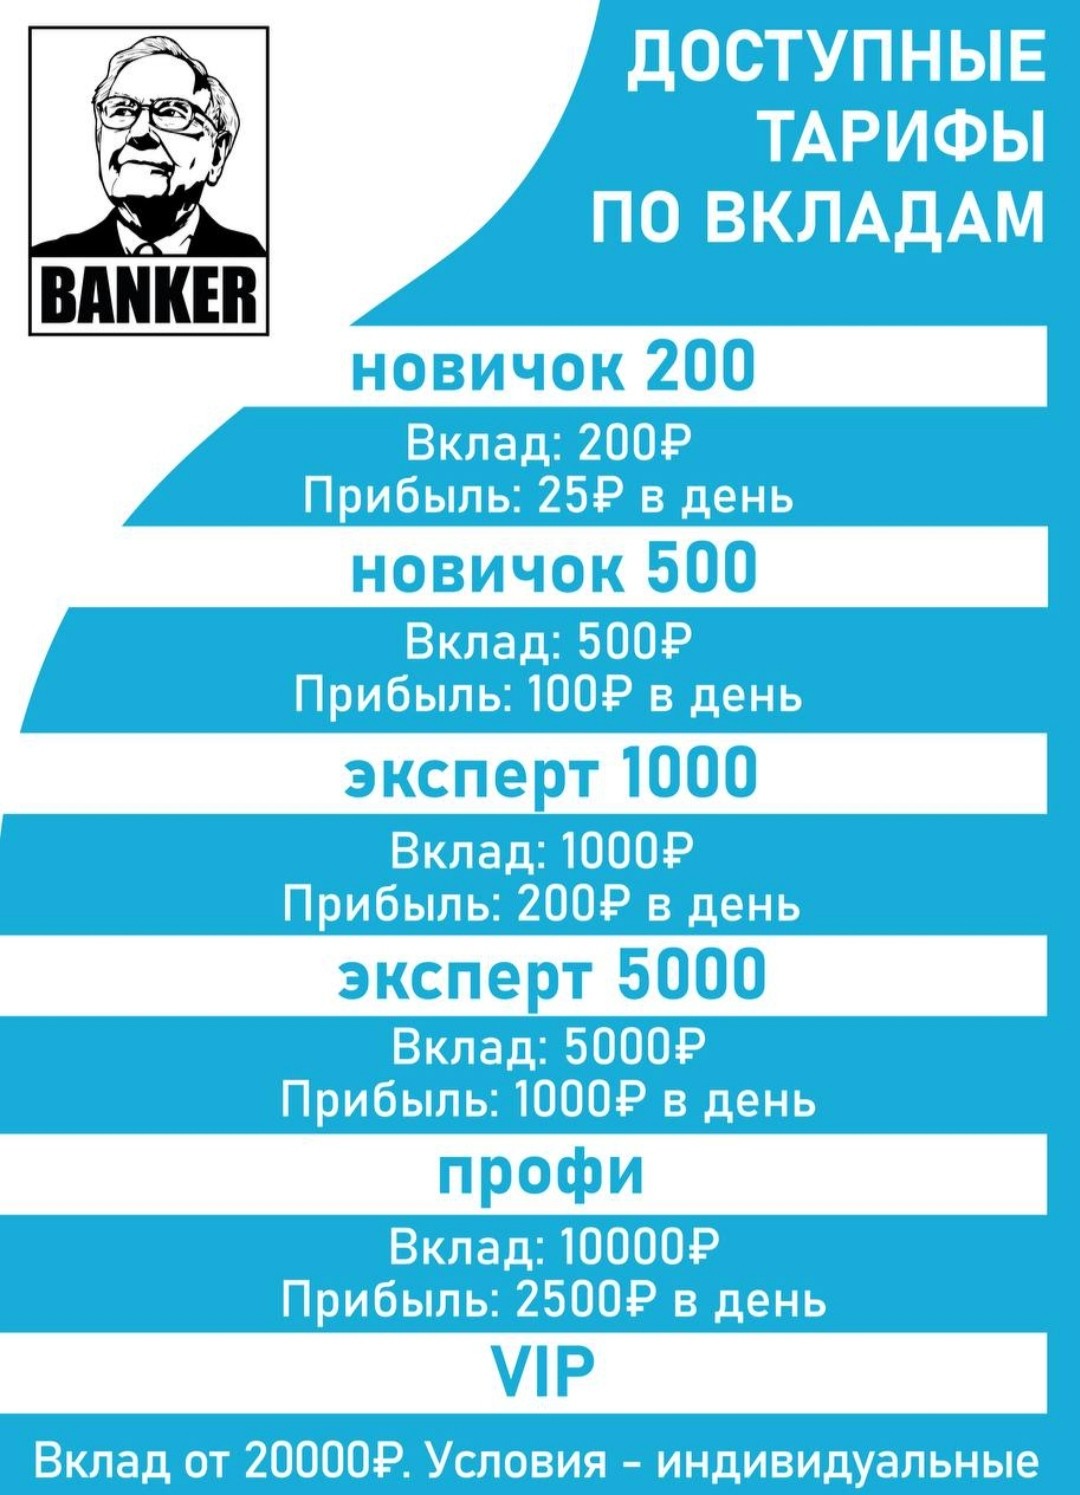 Banker телеграм проект